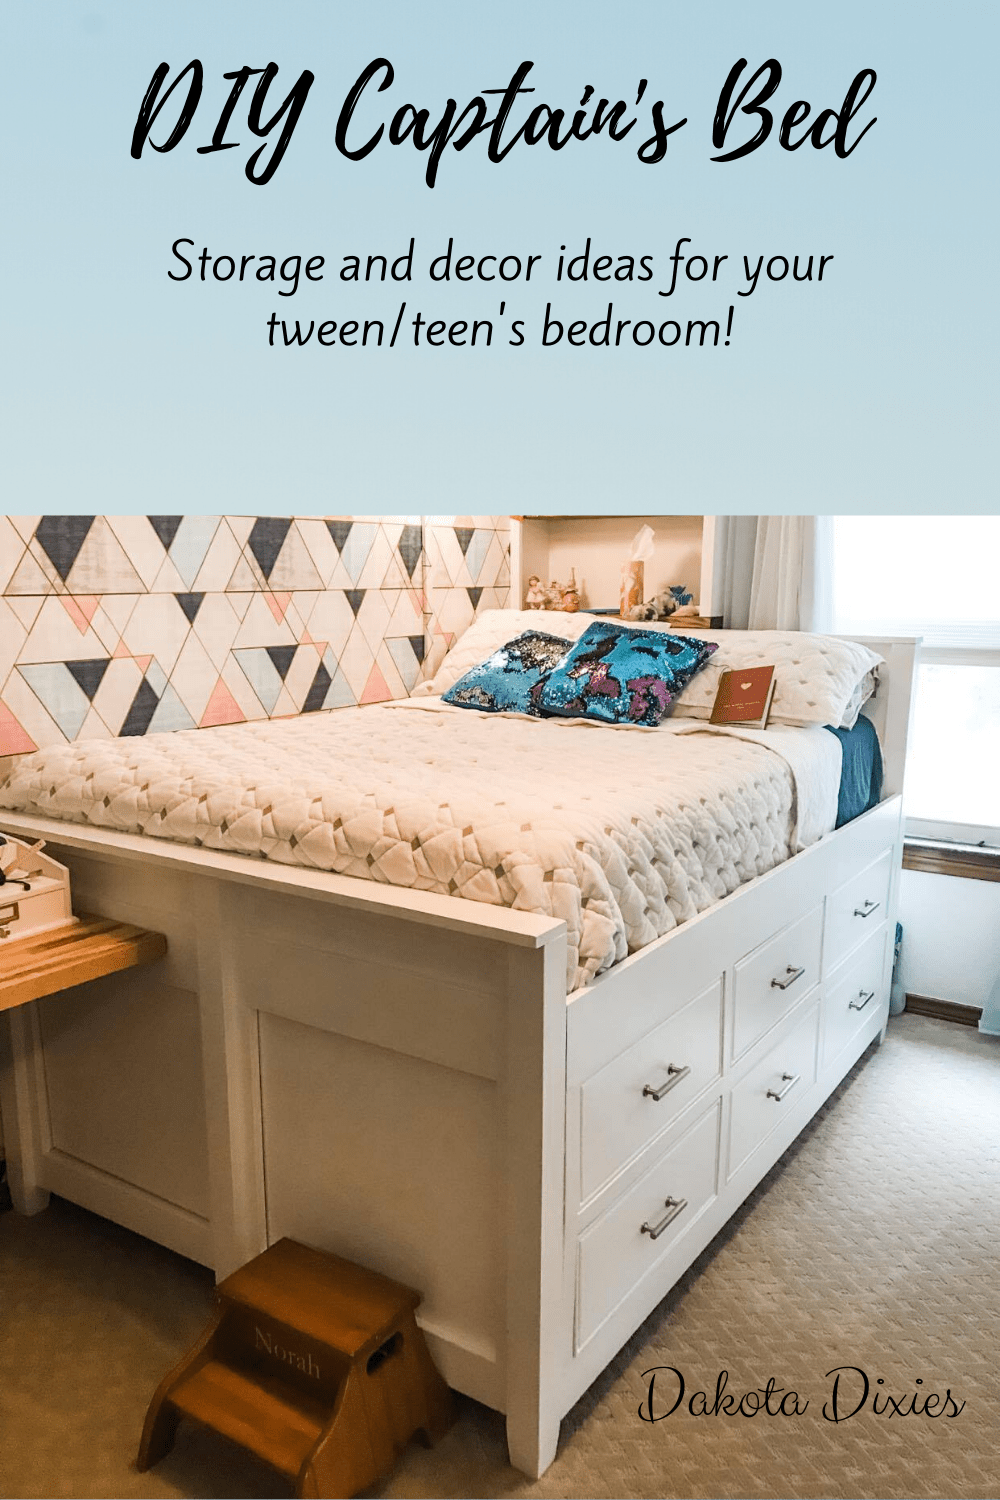 DIY Captain's Bed » Dakota Dixies » Teen bedroom ideas - DIY Captain's Bed » Dakota Dixies » Teen bedroom ideas -   16 diy Bed Frame for teens ideas